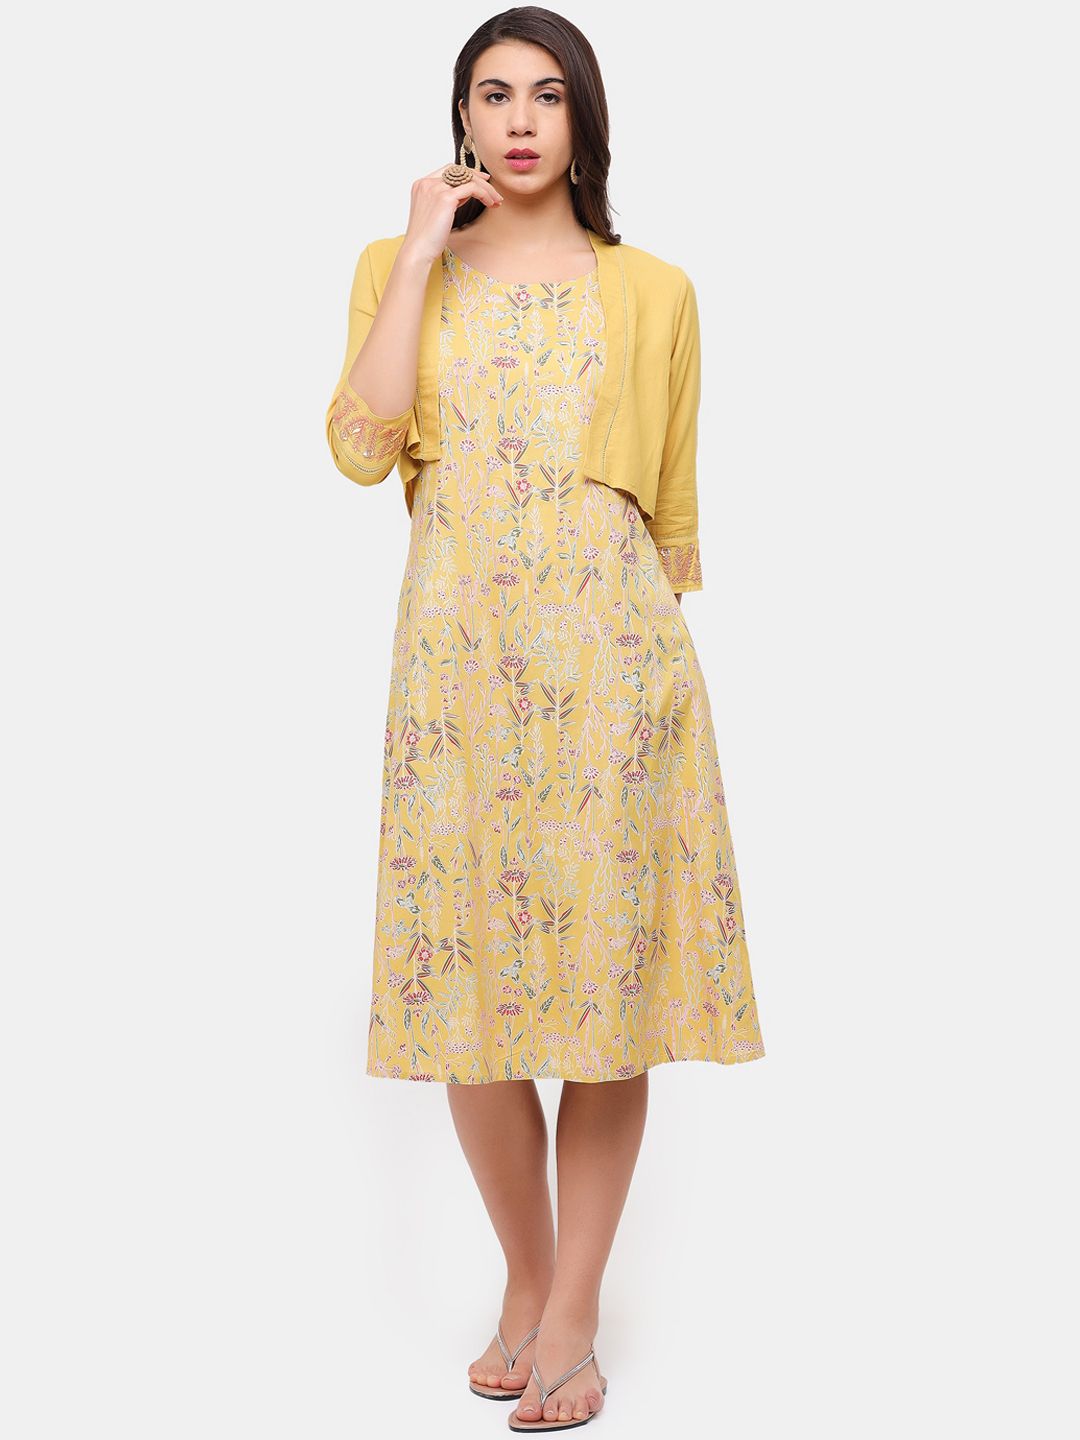 IMARA Yellow Midi Dress Price in India